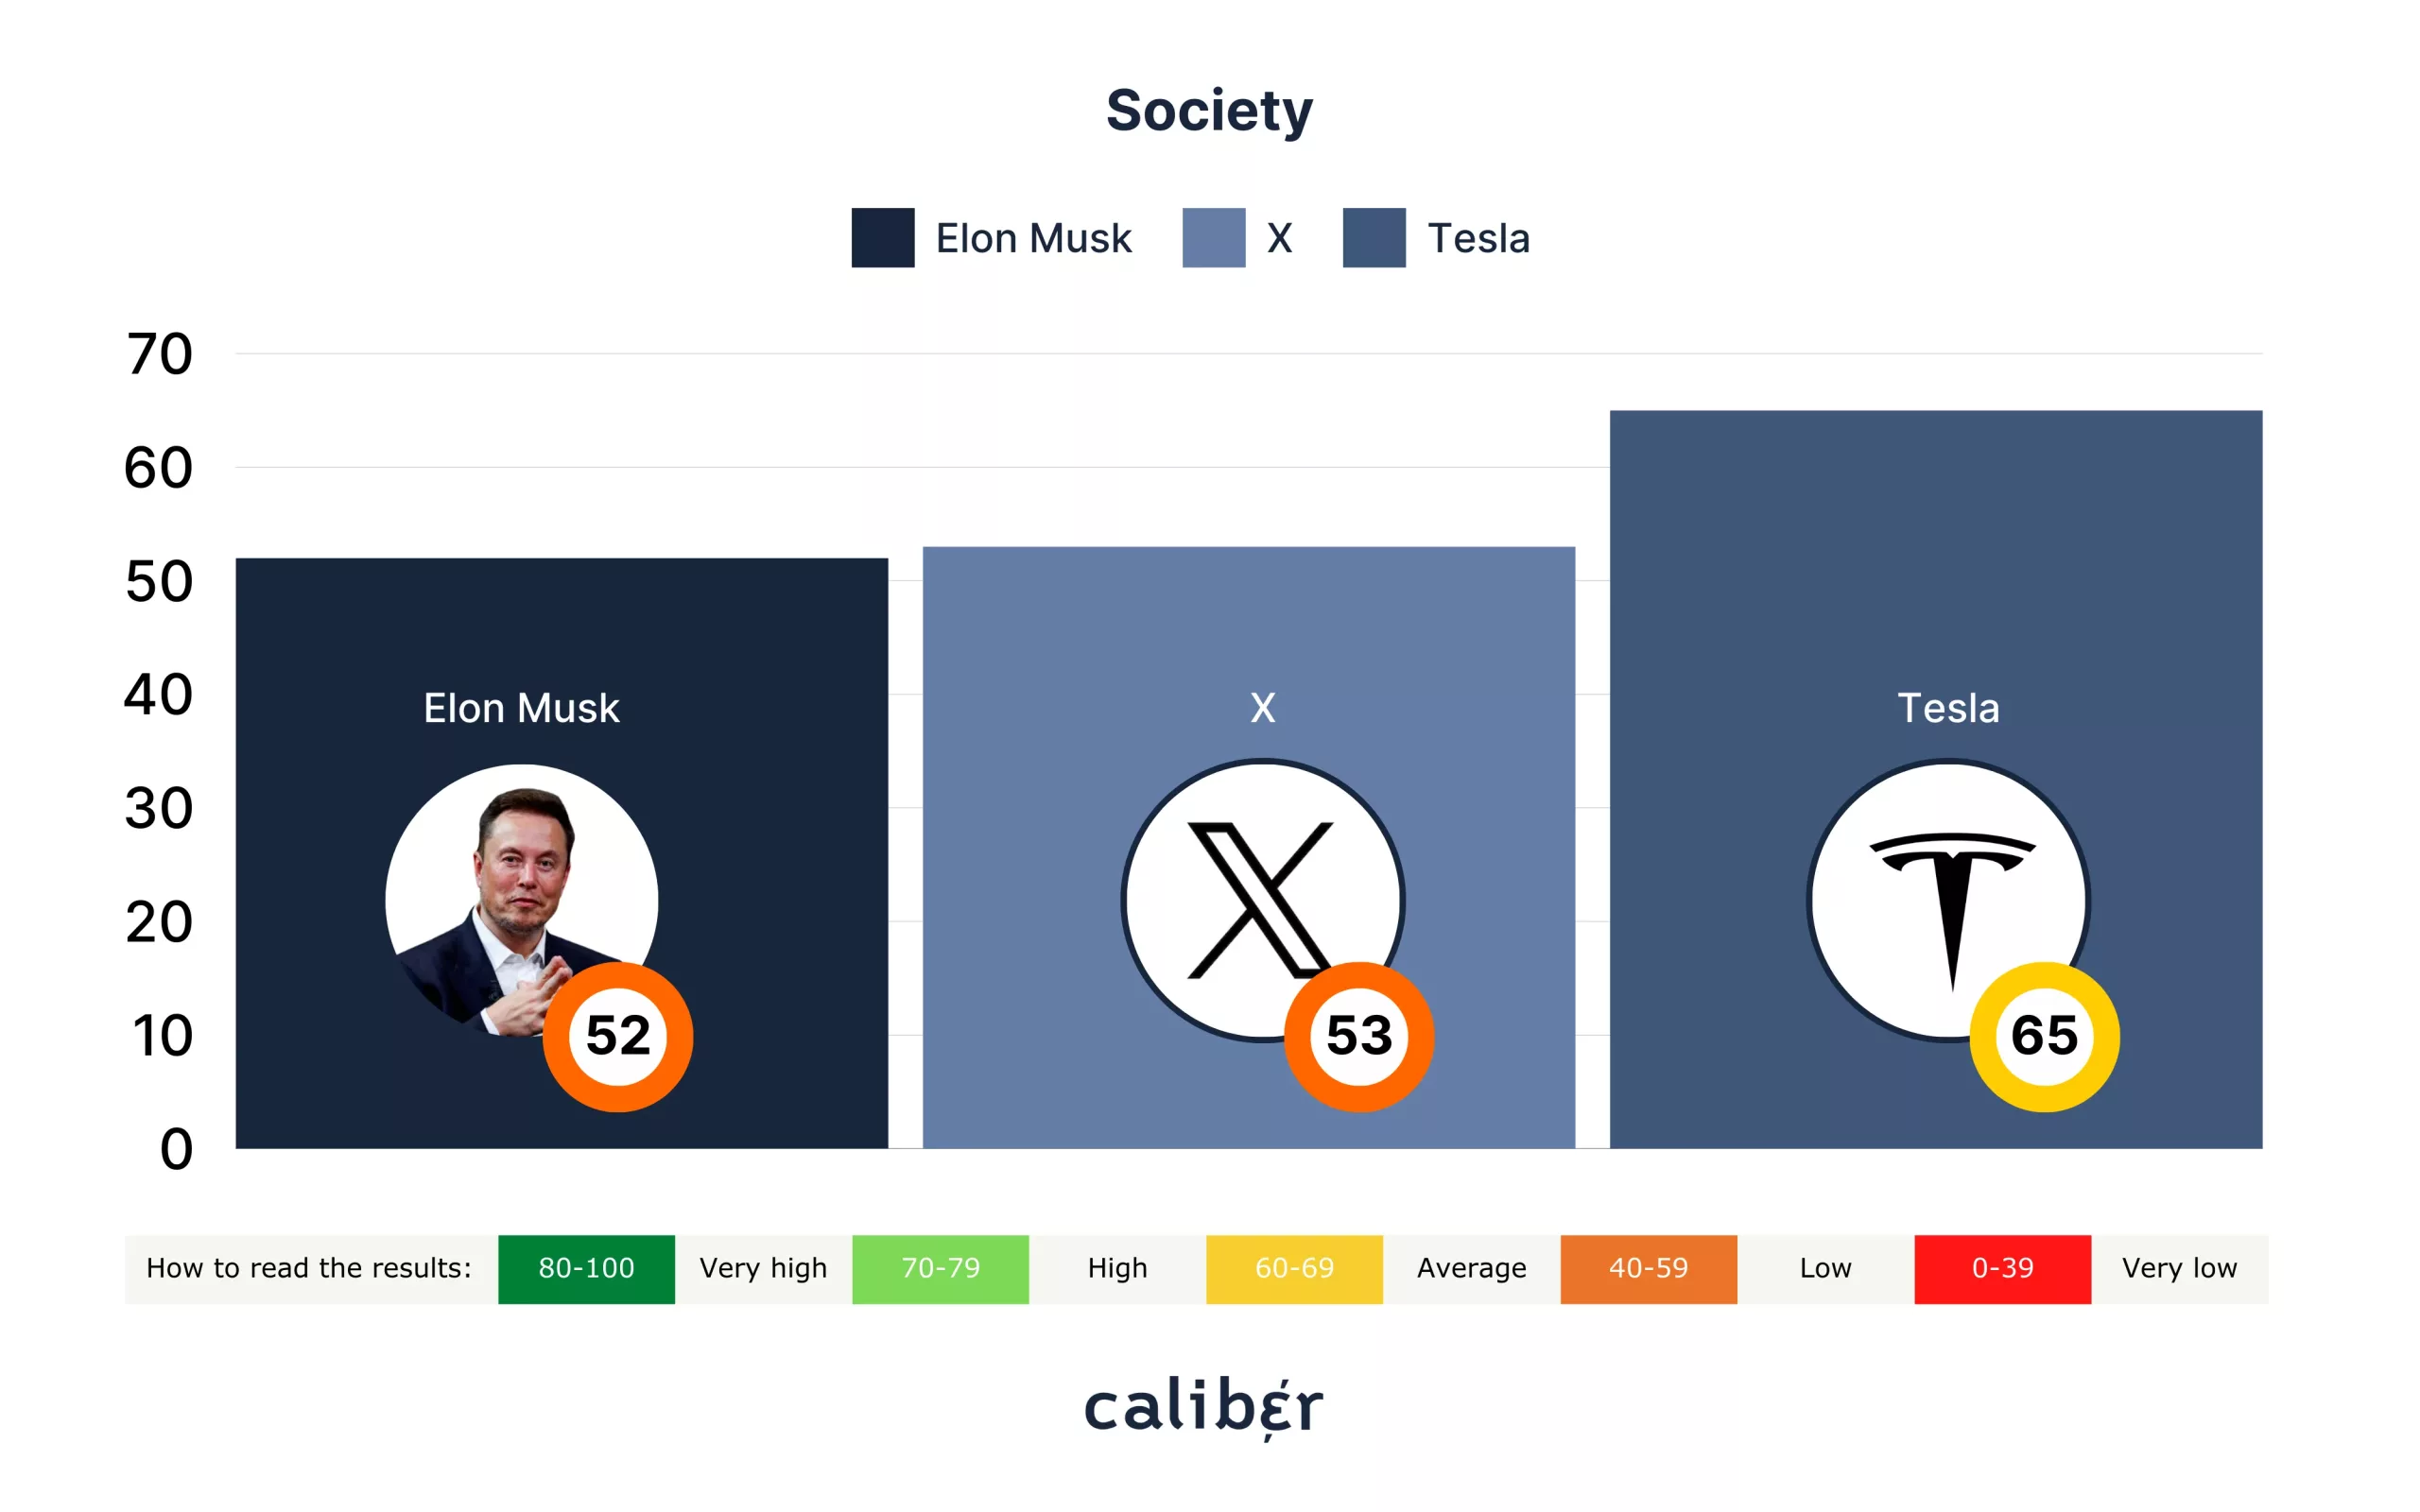 Elon Musk Society Score